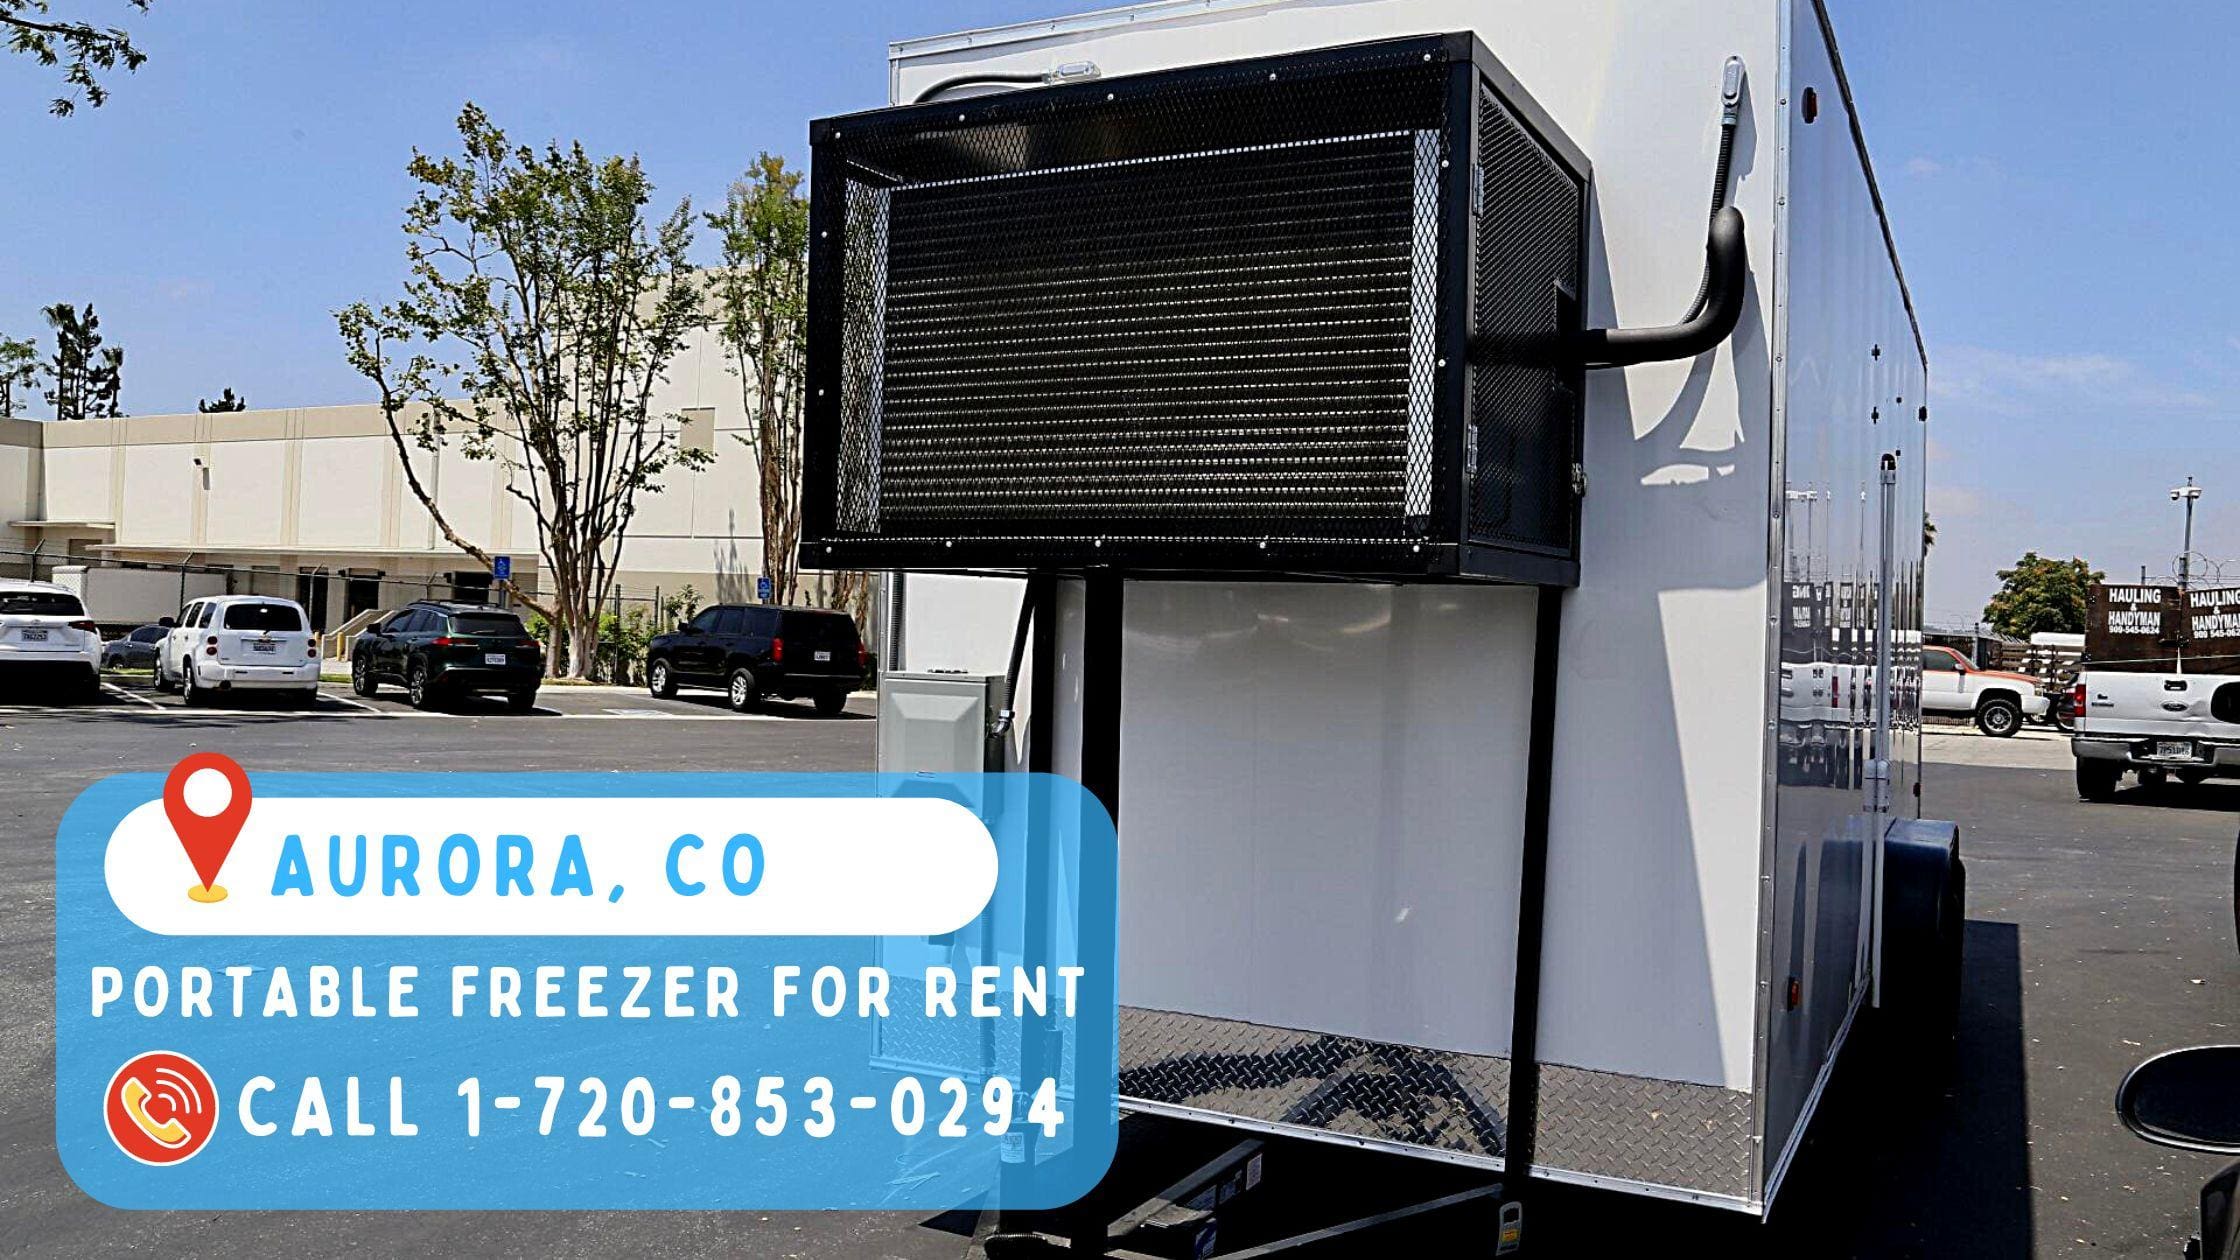 Portable freezer for rent in Aurora